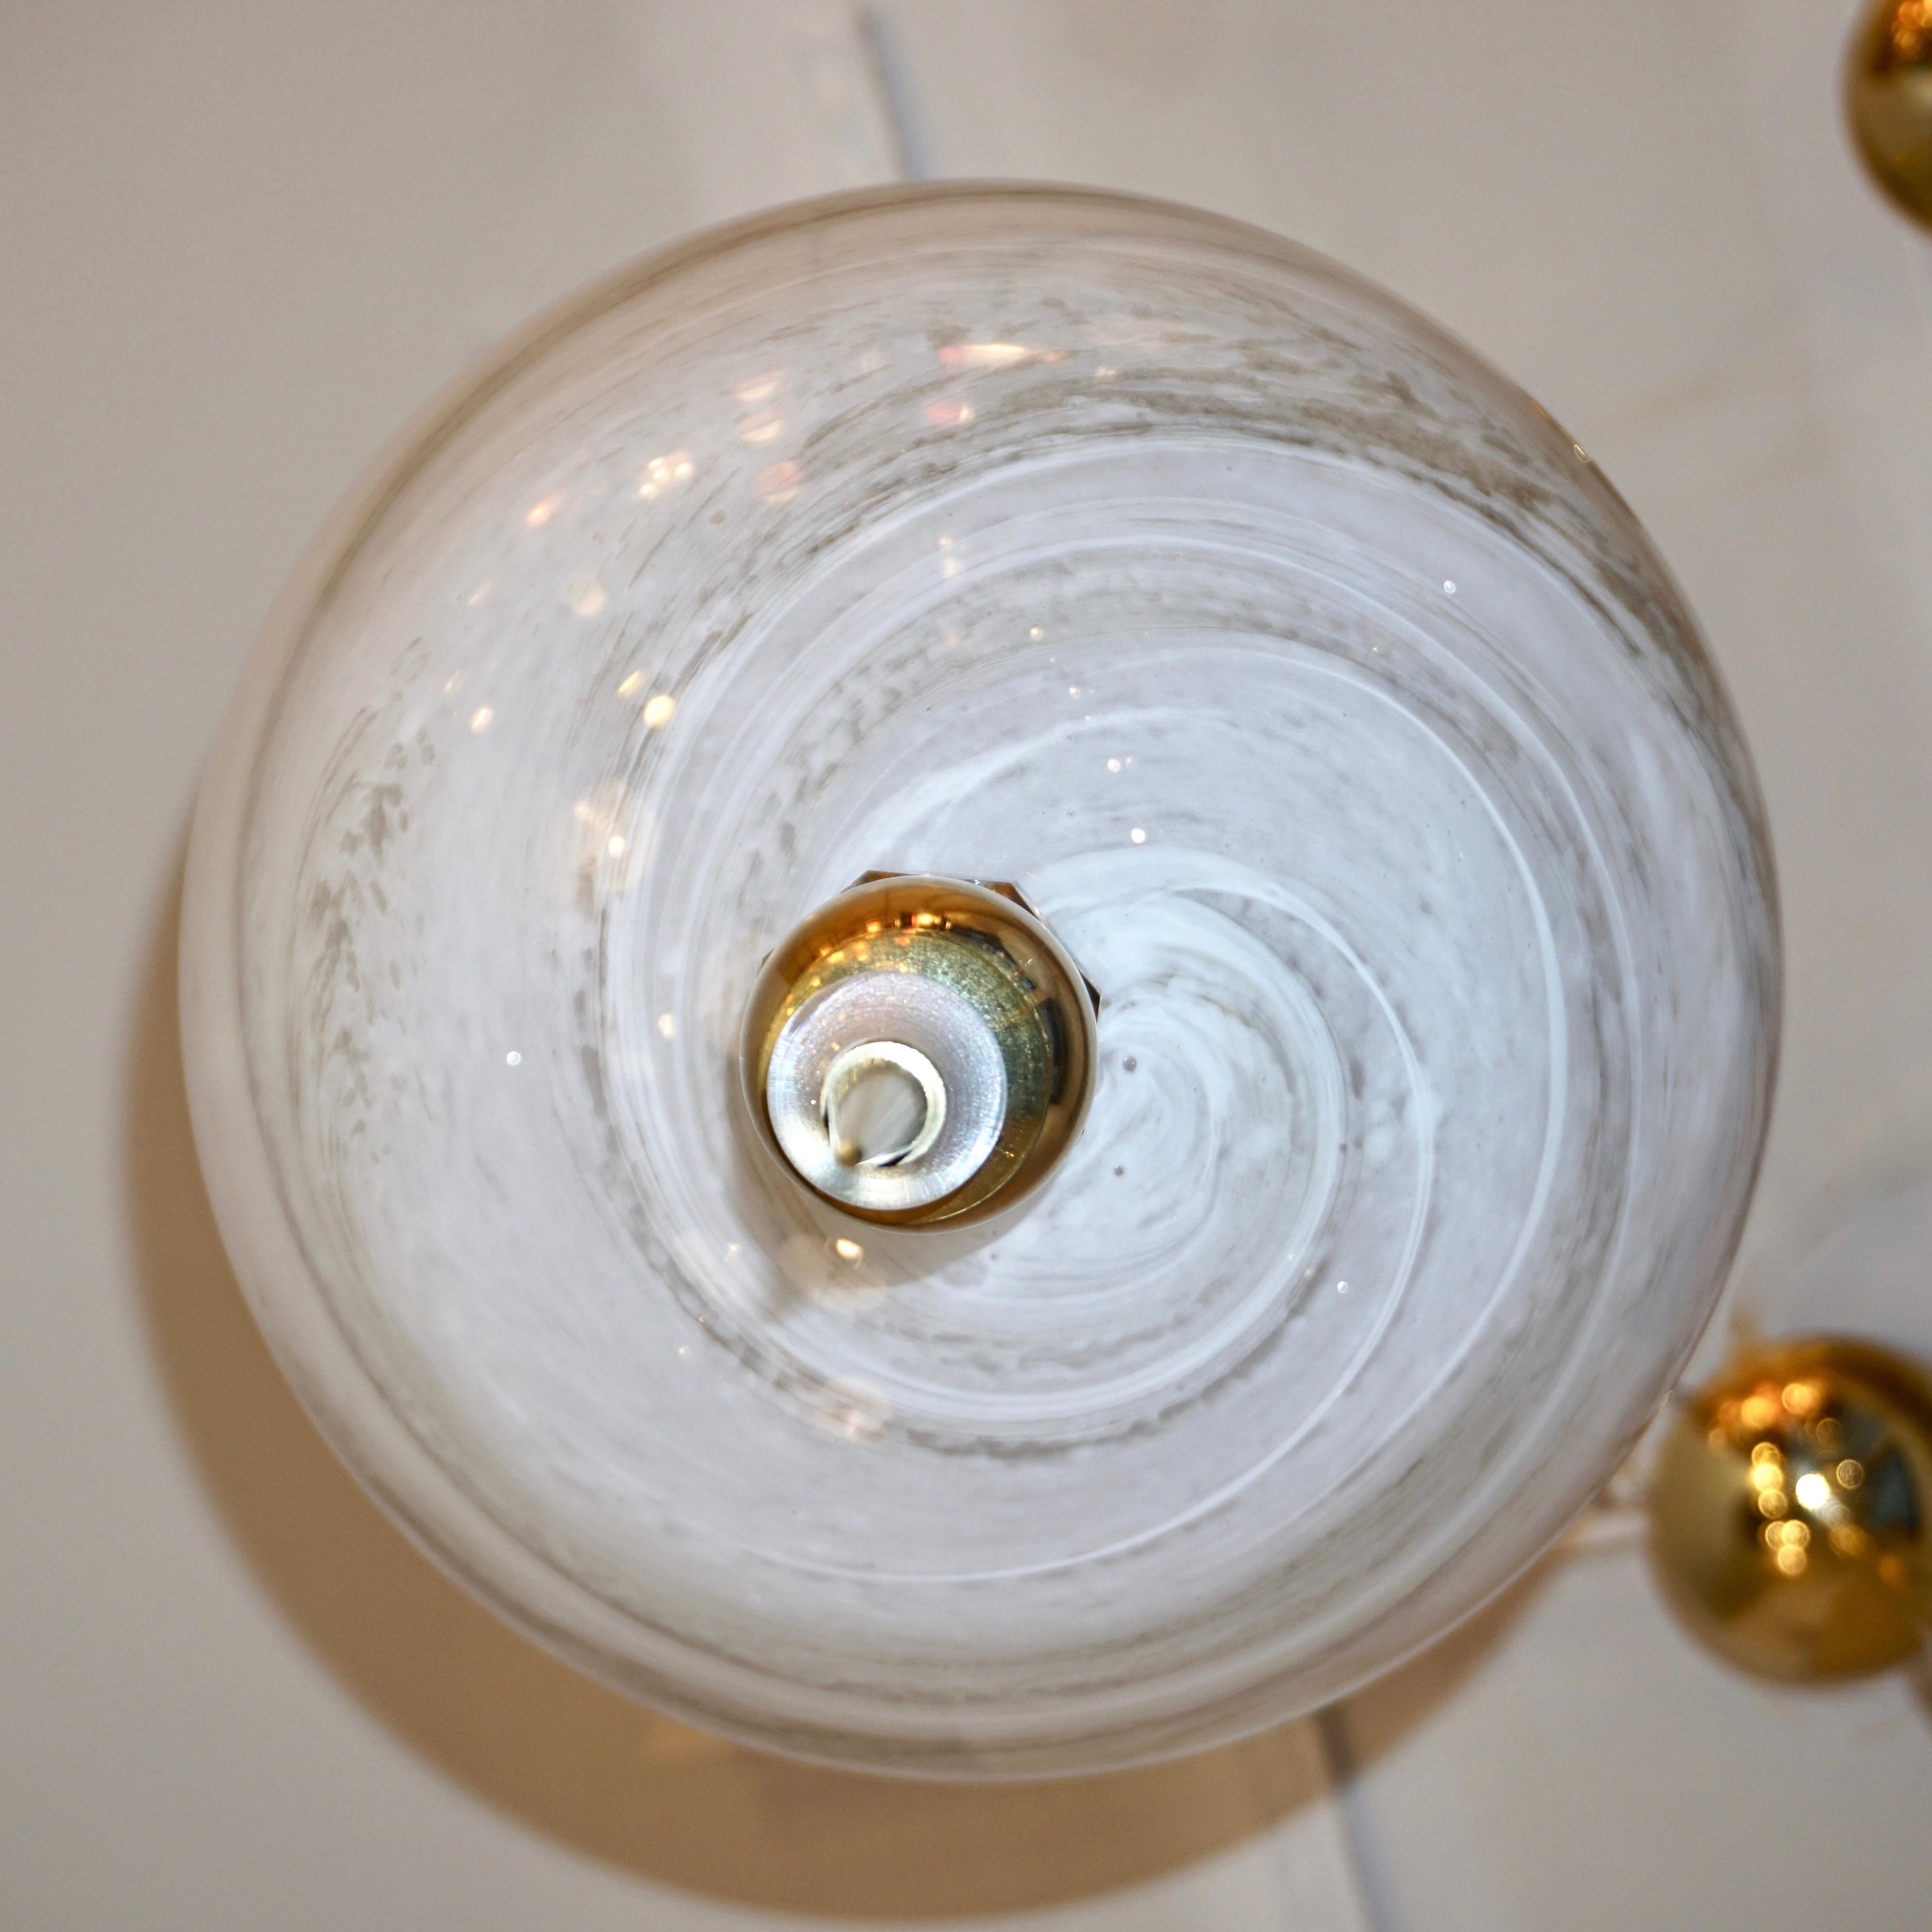 Contemporary Bespoke Italian Brass and Cream White Alabaster Murano Glass Oval Pendant Light For Sale